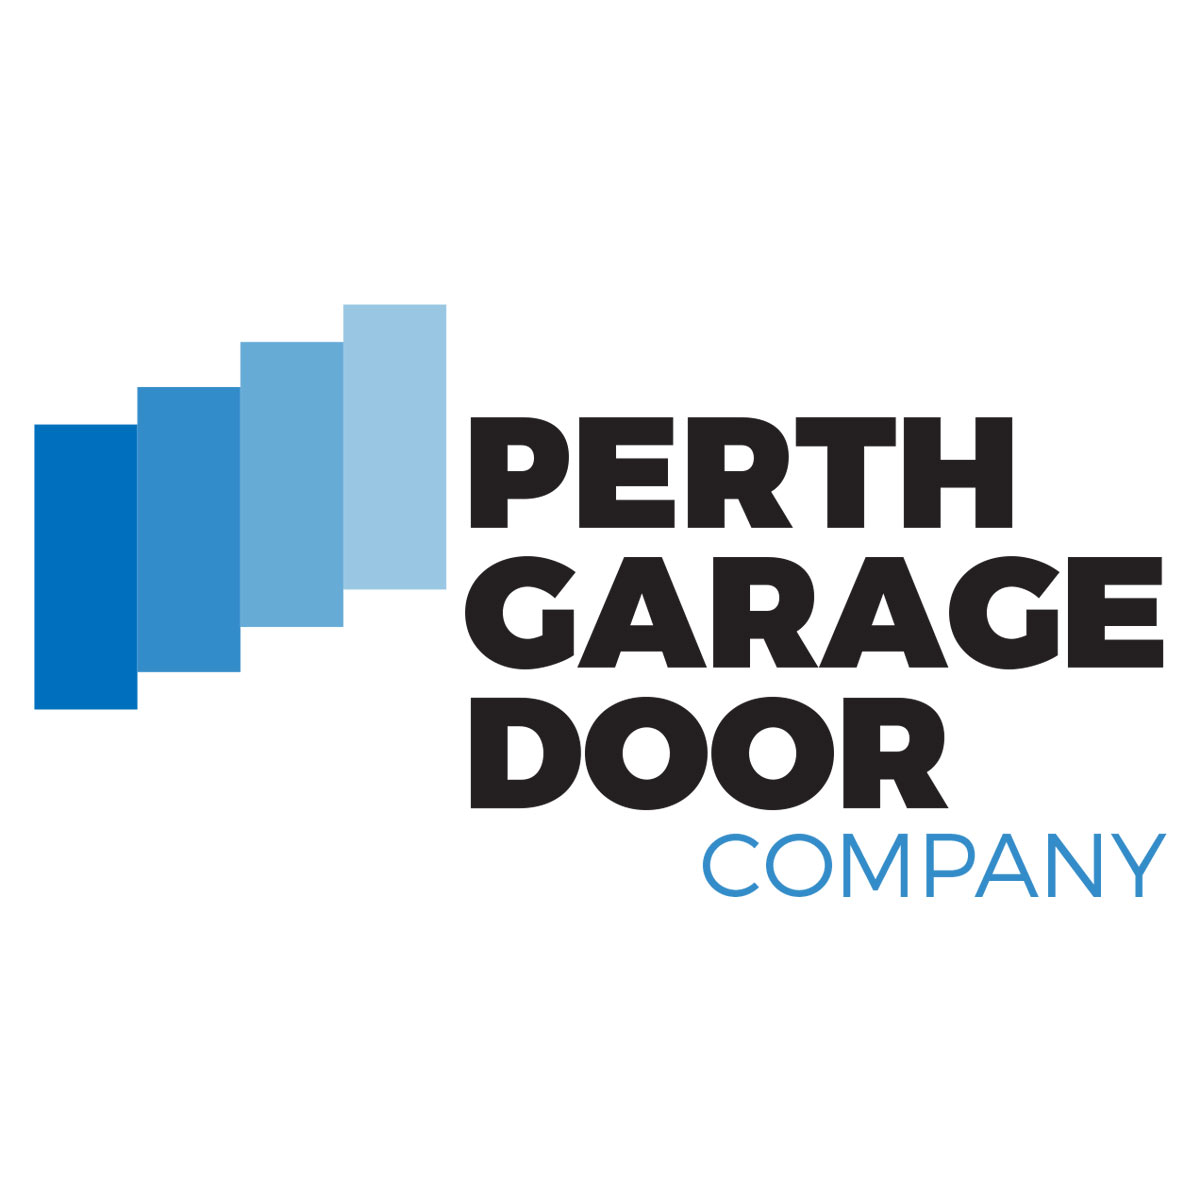 Garage Door Prices Perth Cost Buying Guide 2020